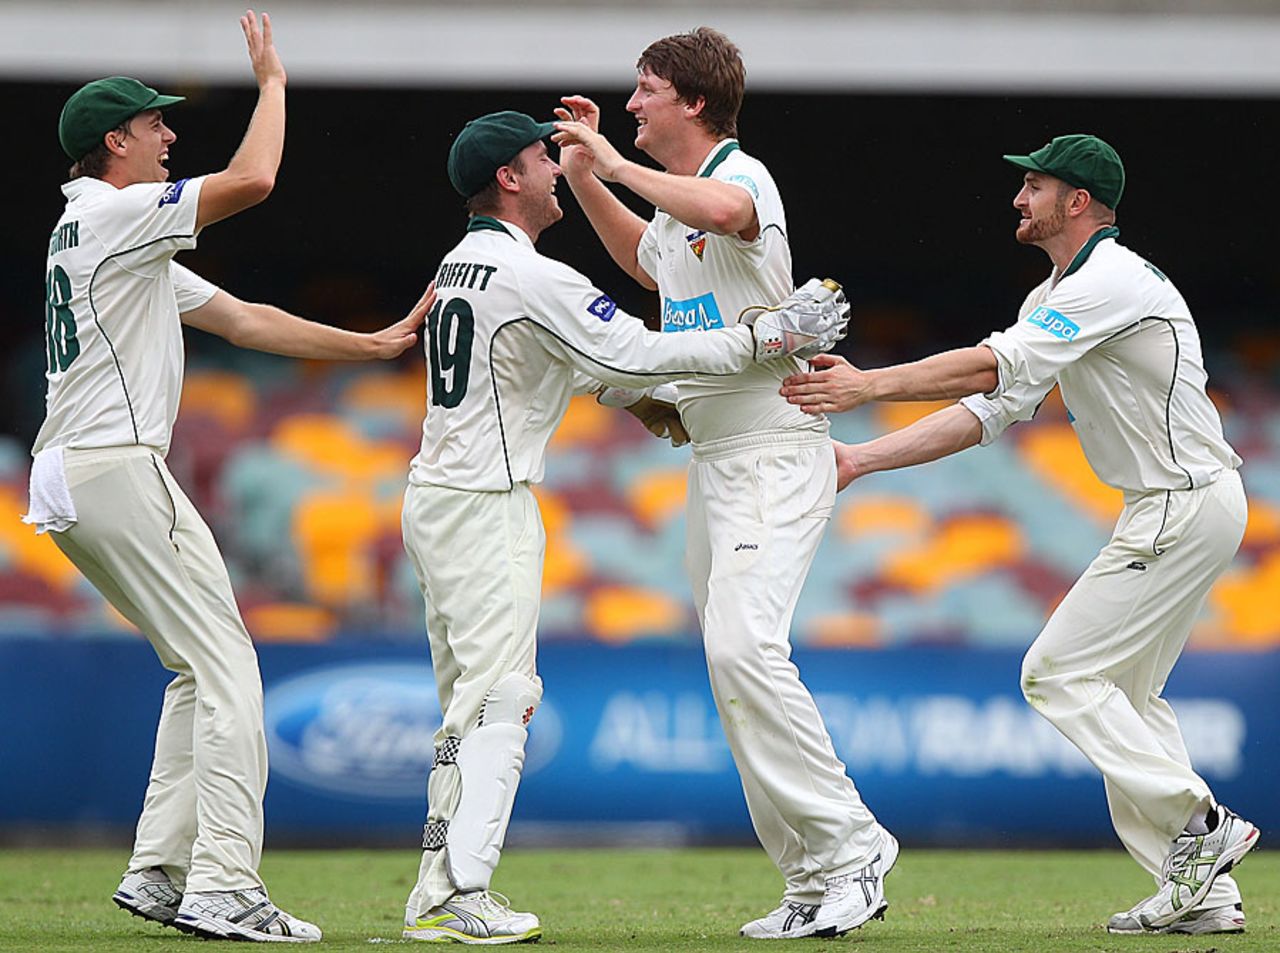 Tasmania celebrate a wicket, Queensland v Tasmania, Sheffield Shield Final, 2nd day, Brisbane, March 17 2012